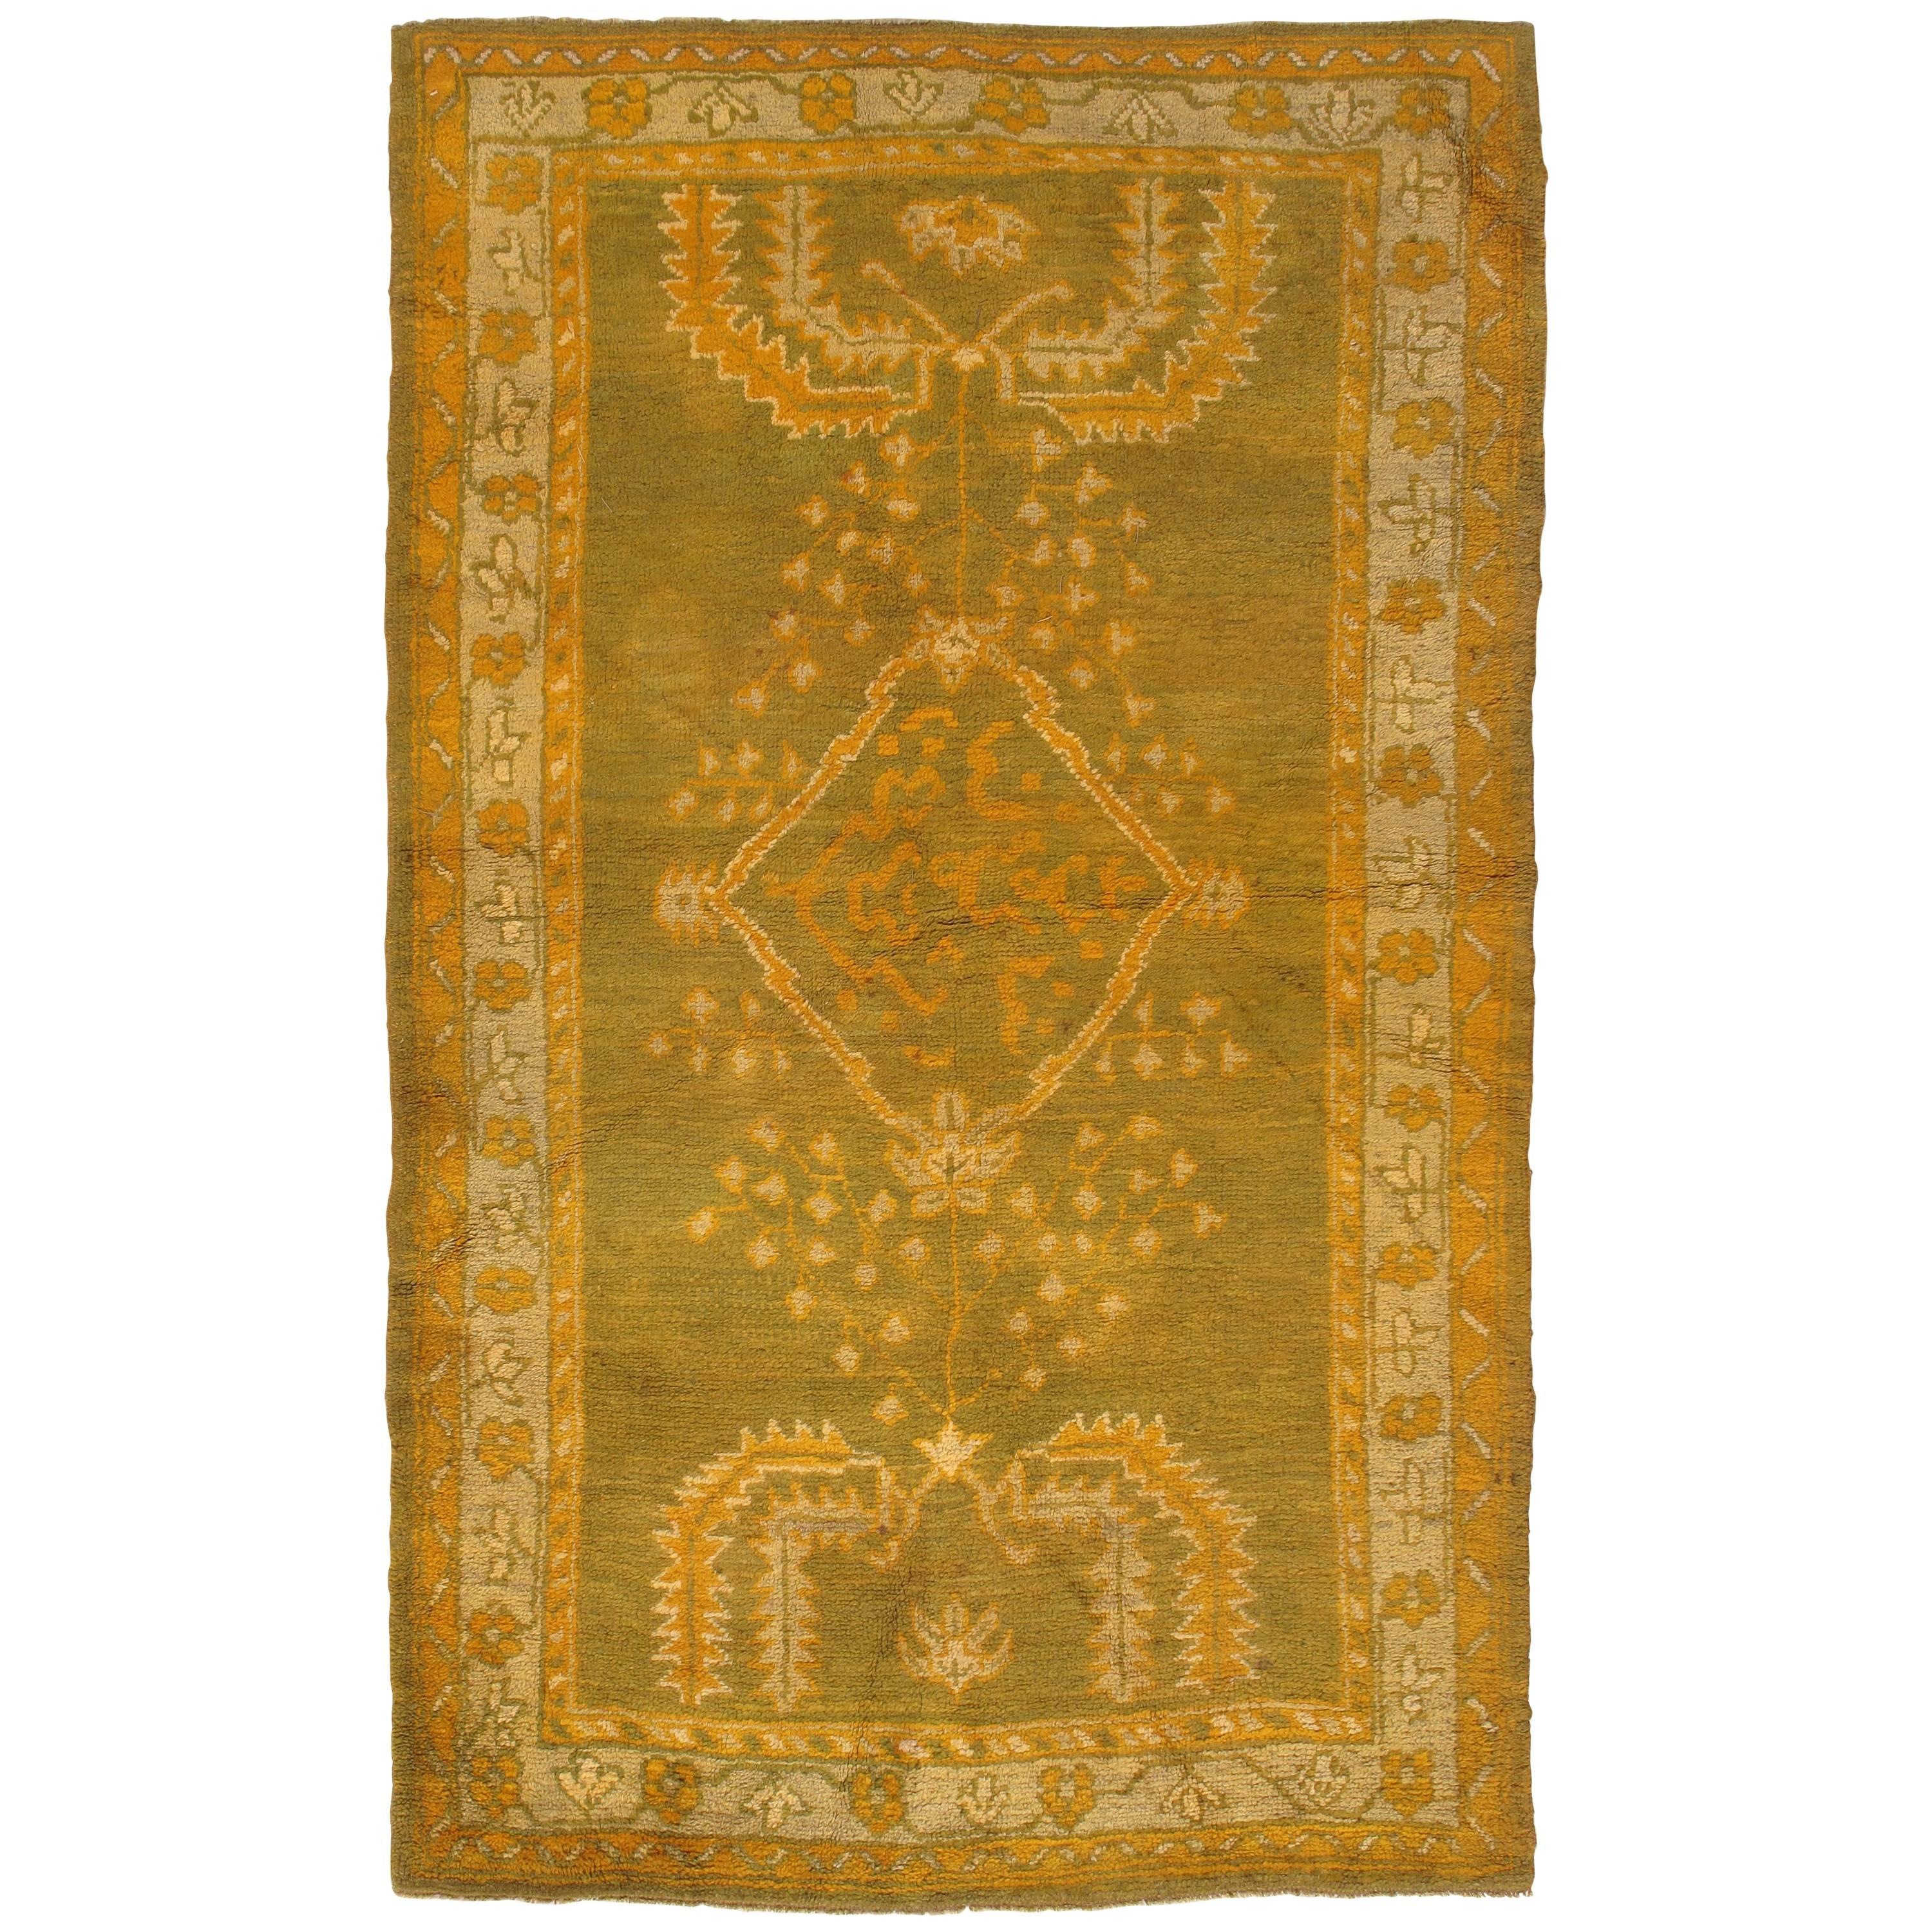 Antique Oushak Carpet, Oriental Rug, Handmade Green, Muted Taupe, Soft Saffron